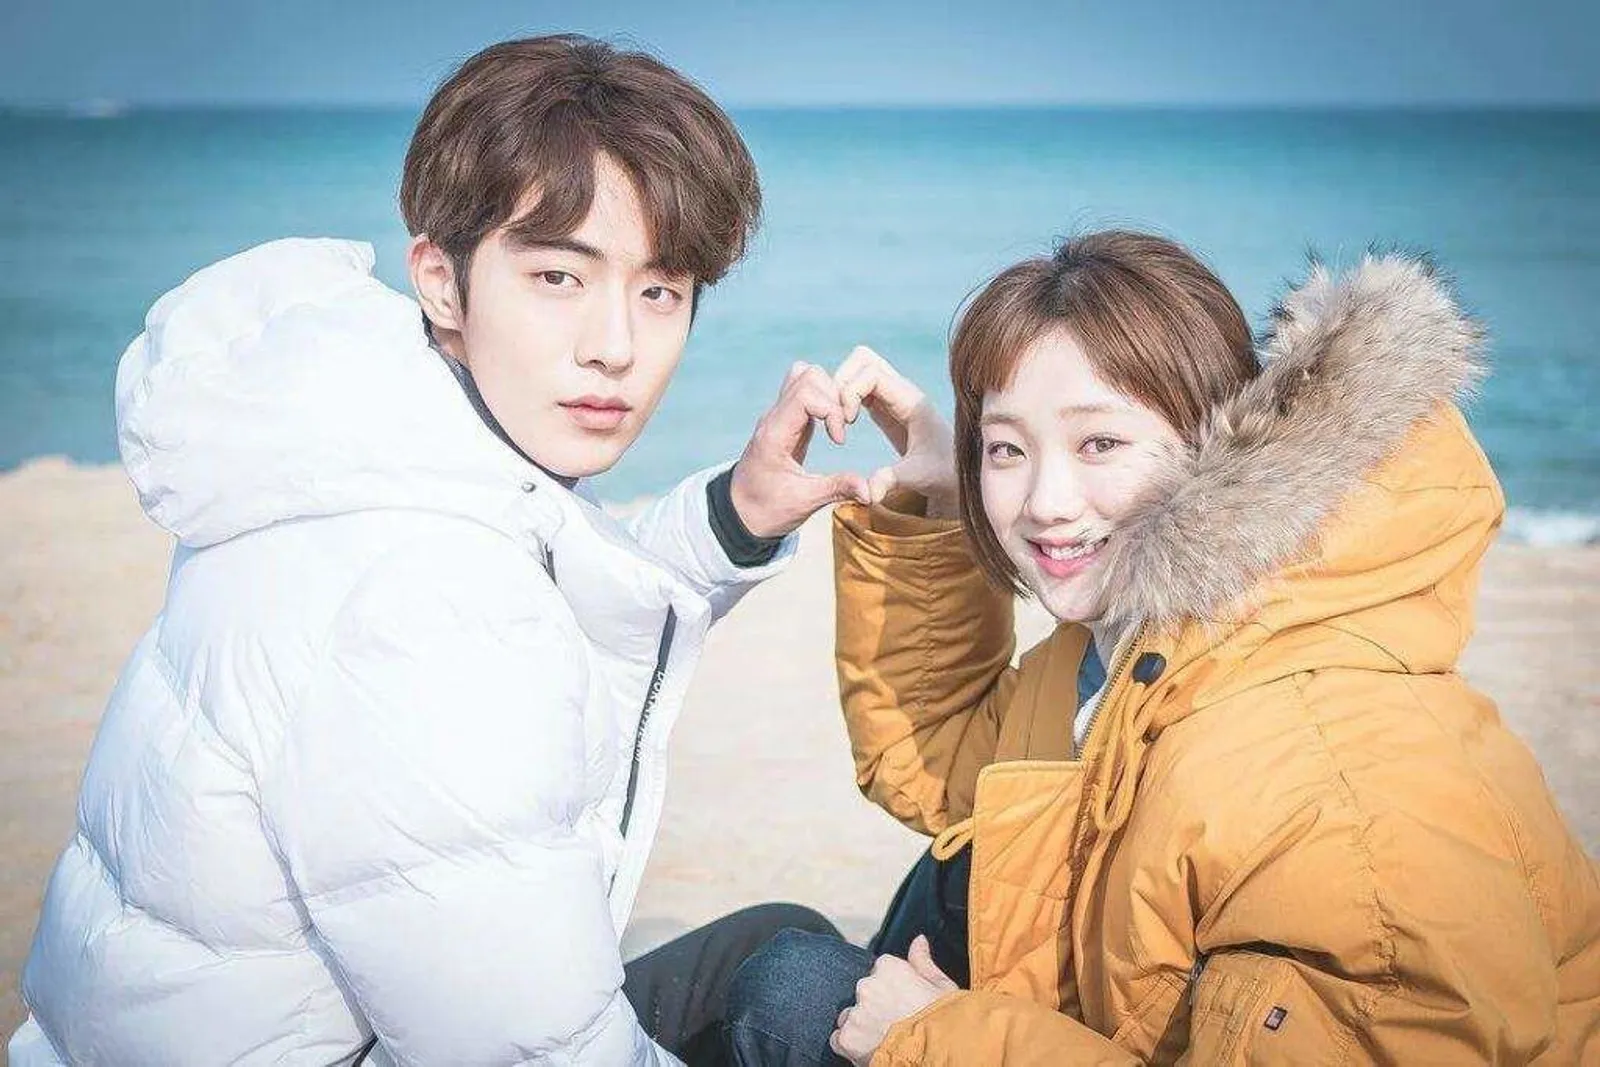 Romantis Banget, Coba 5 Ide Kencan Seru a la Drama Korea Ini Yuk!